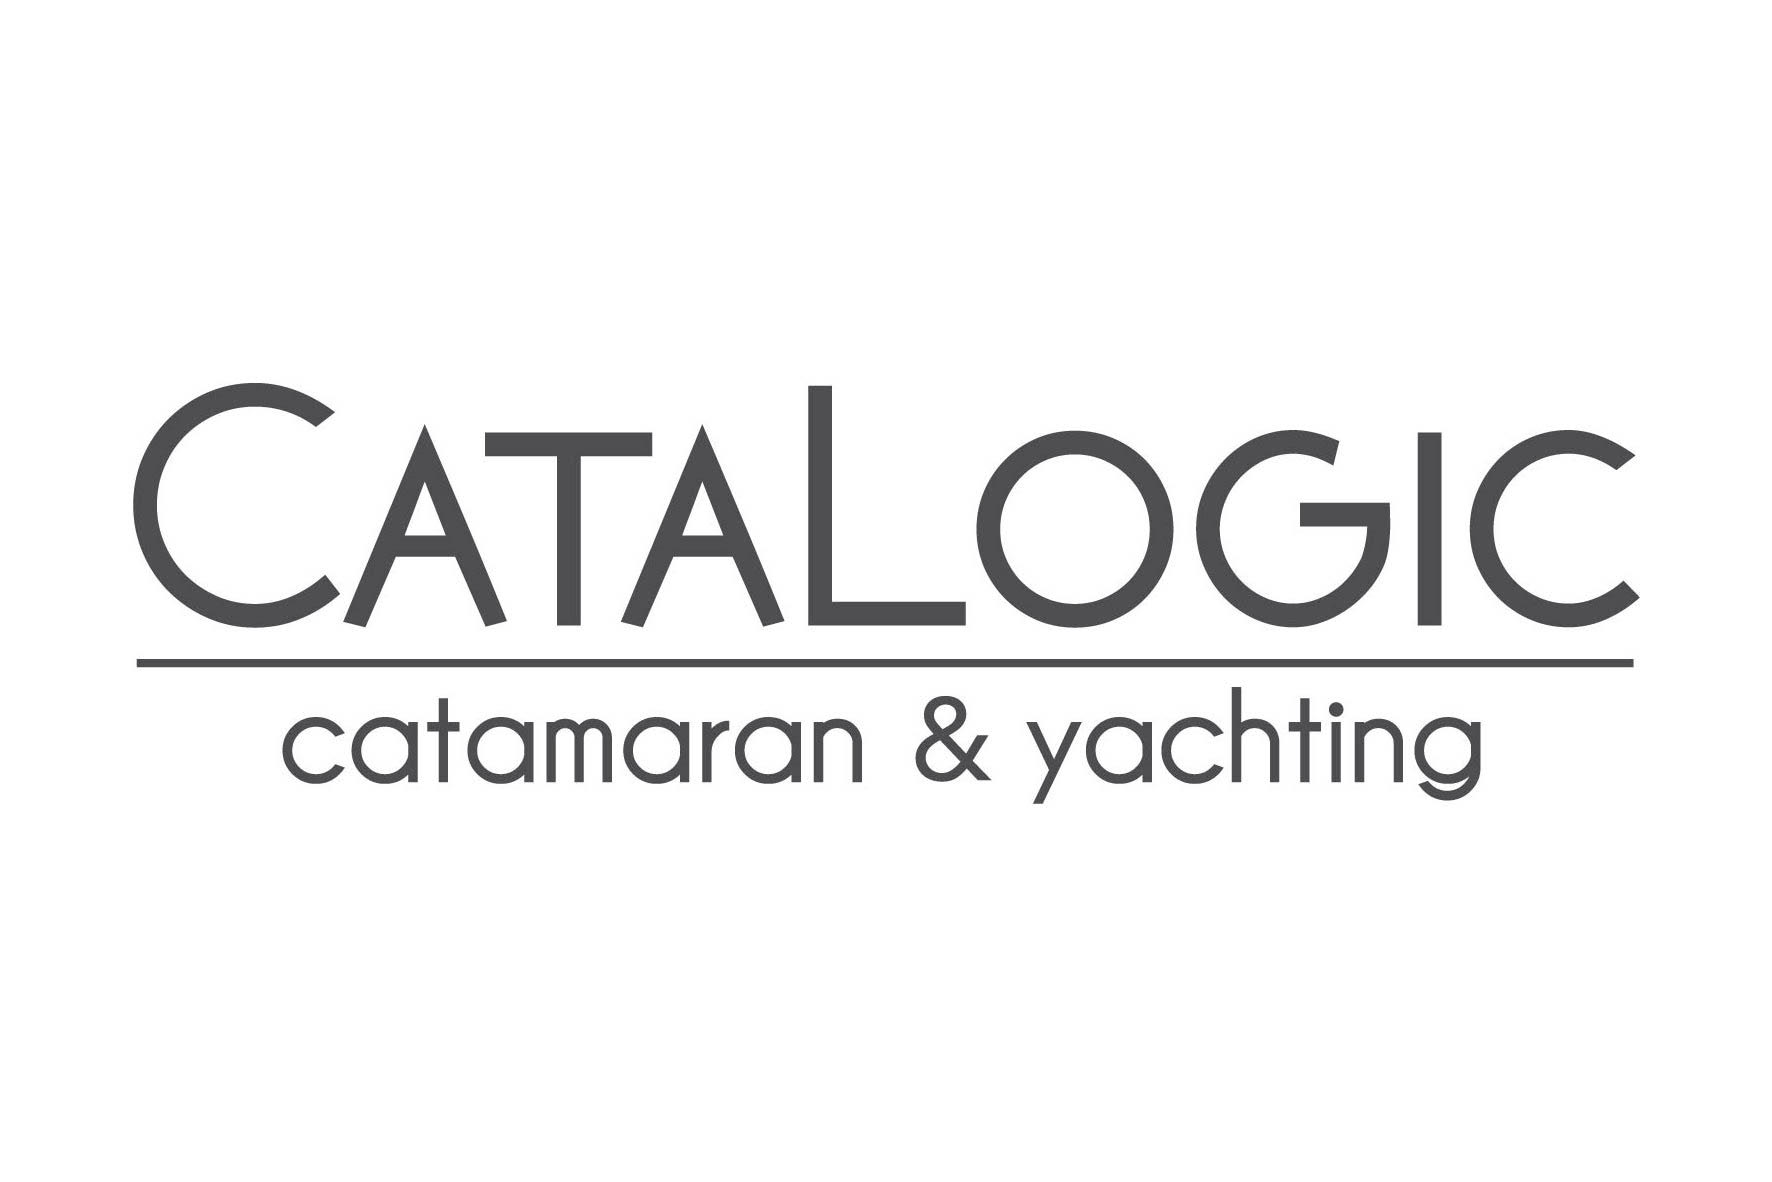 CATALOGIC CATAMARAN & YACHTING 